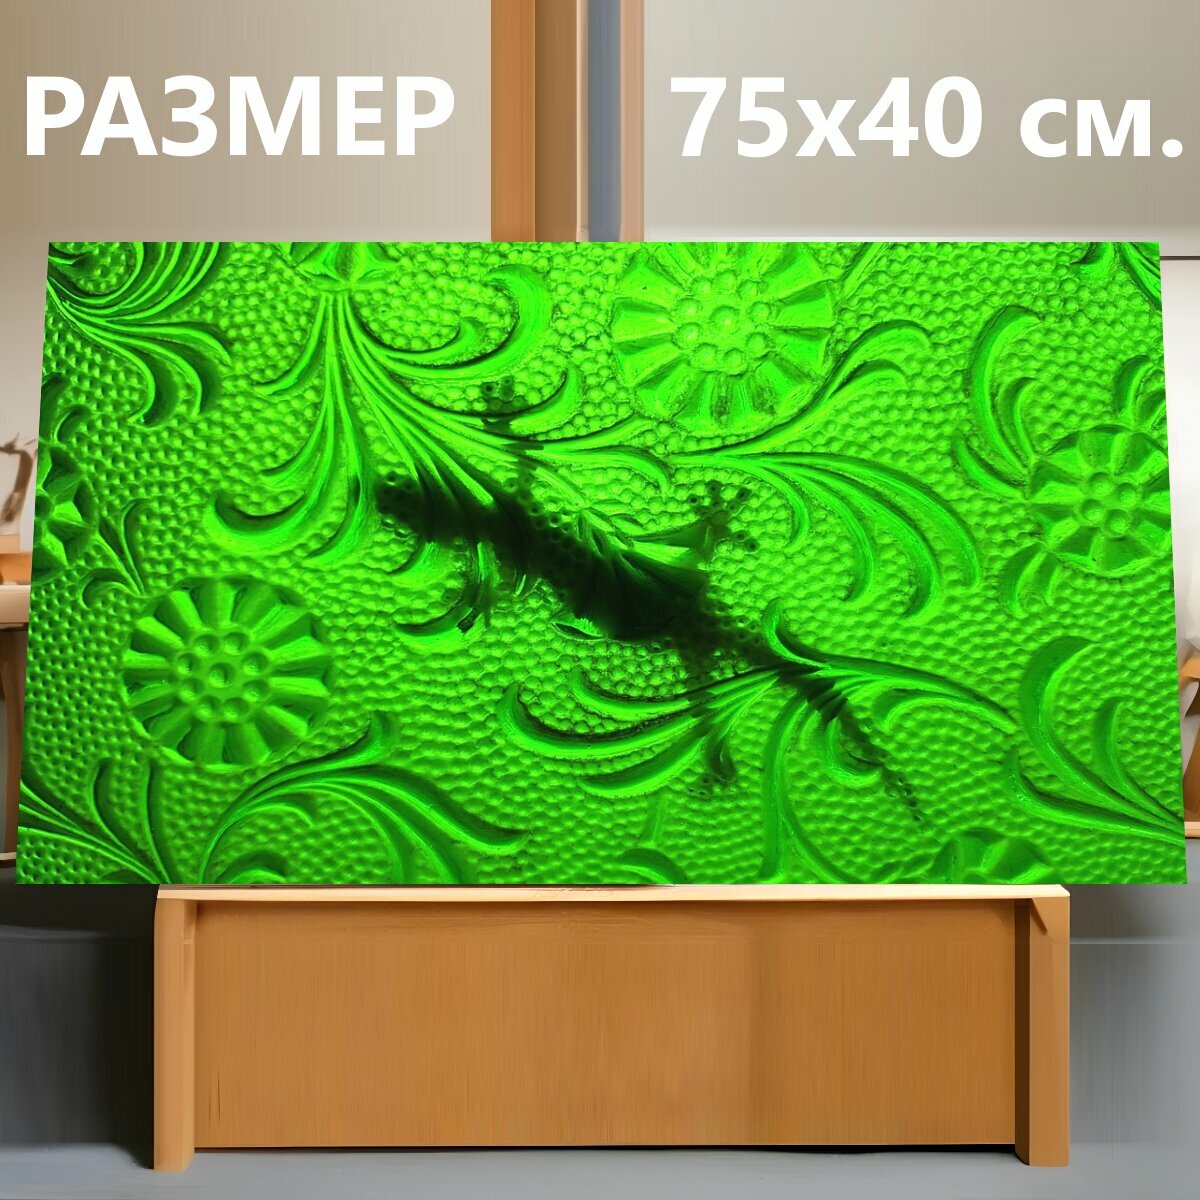 Картина на холсте "Стекло, геккон, шаблон" на подрамнике 75х40 см. для интерьера